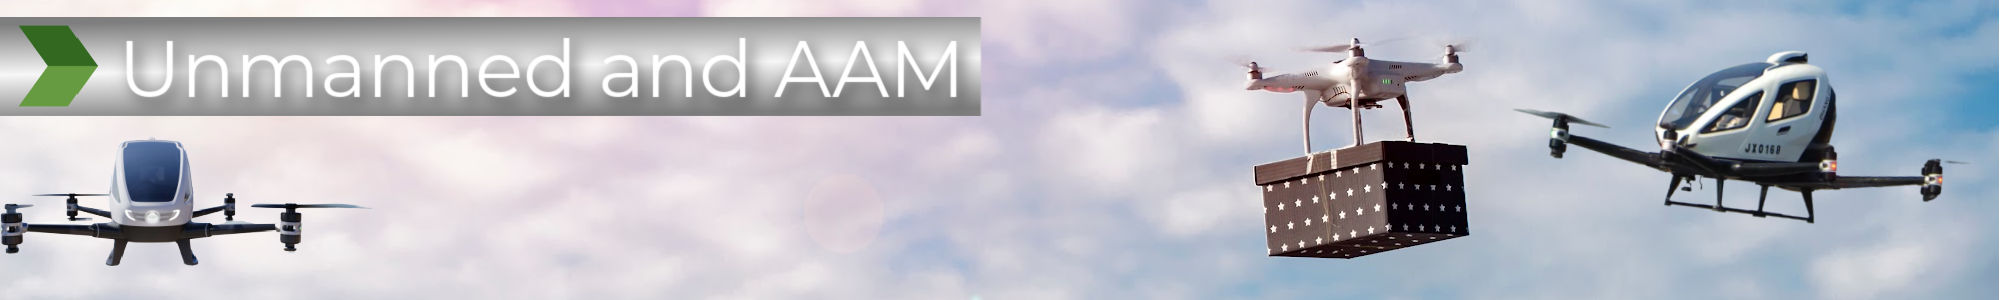 Website Unmanned AAM